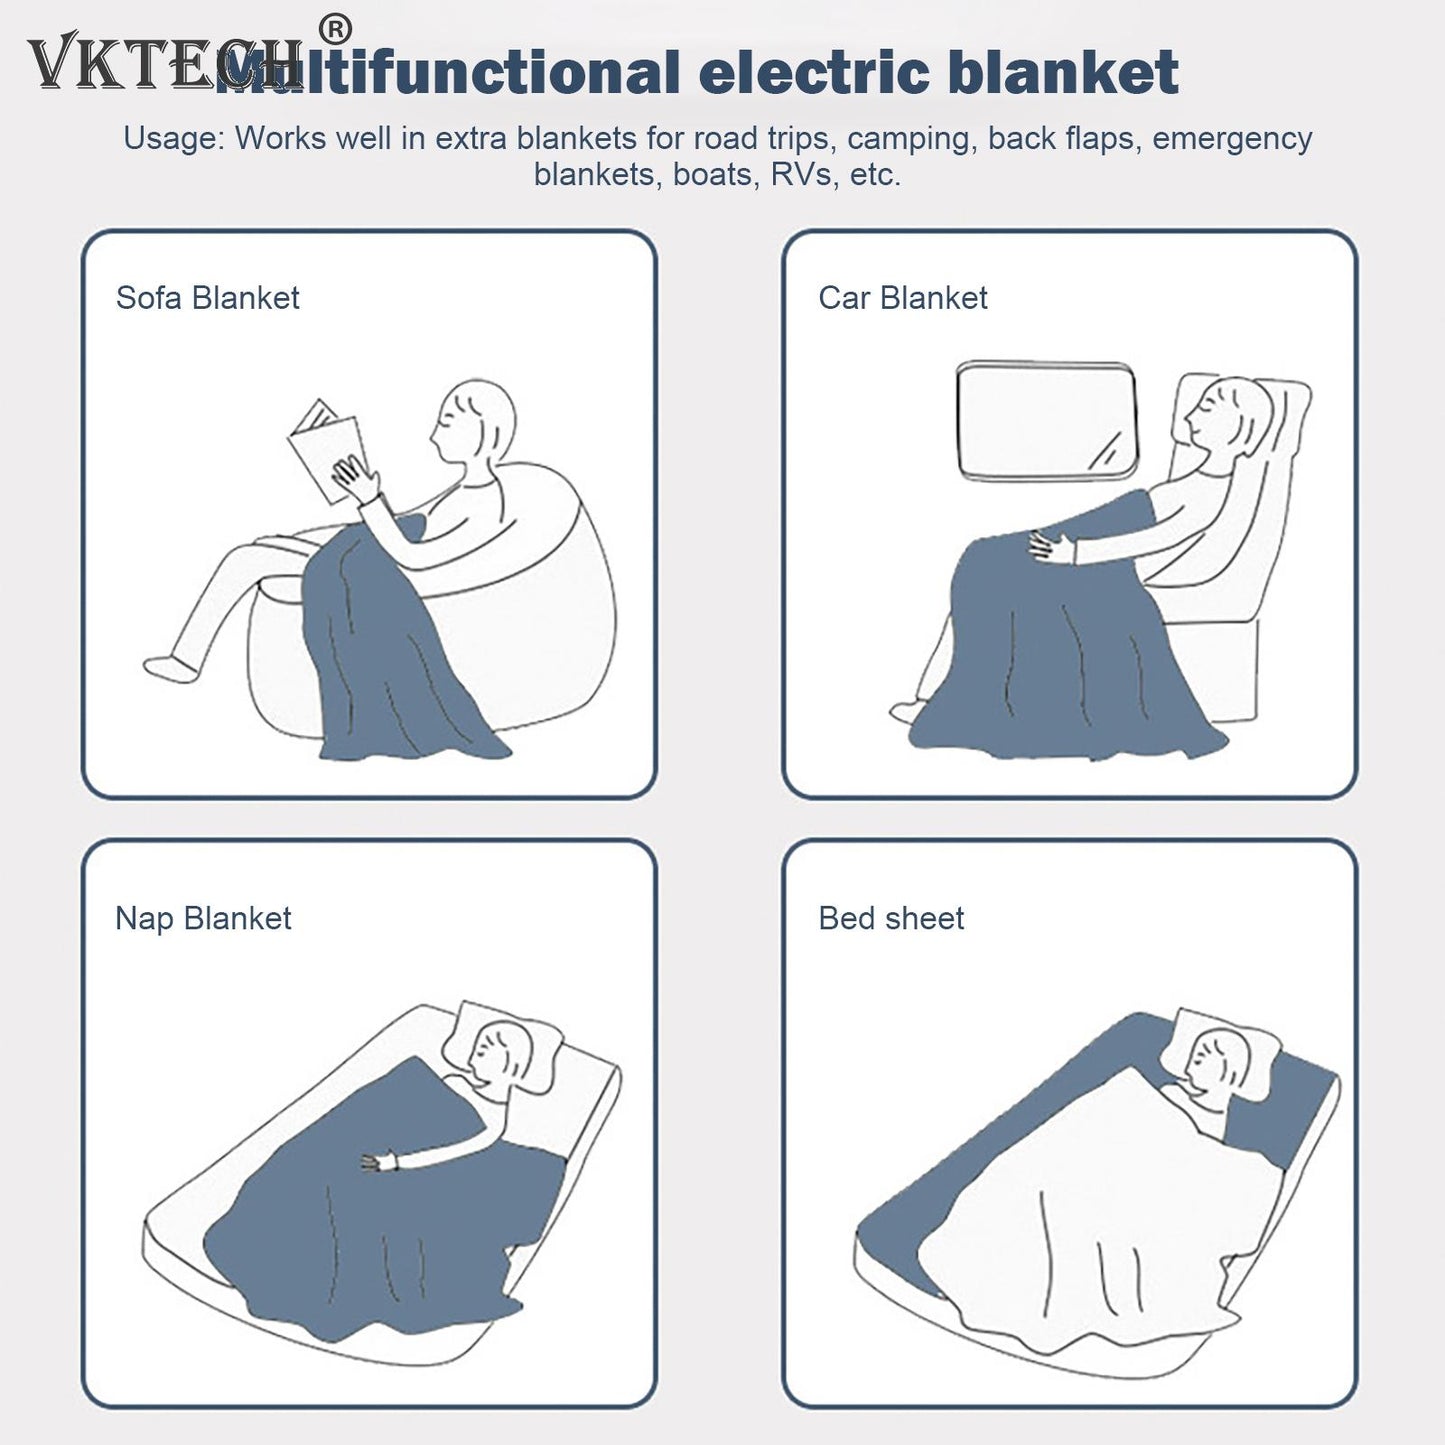 Car Electric Blanket 12 Volt Heated Fleece Travel Throw Timer